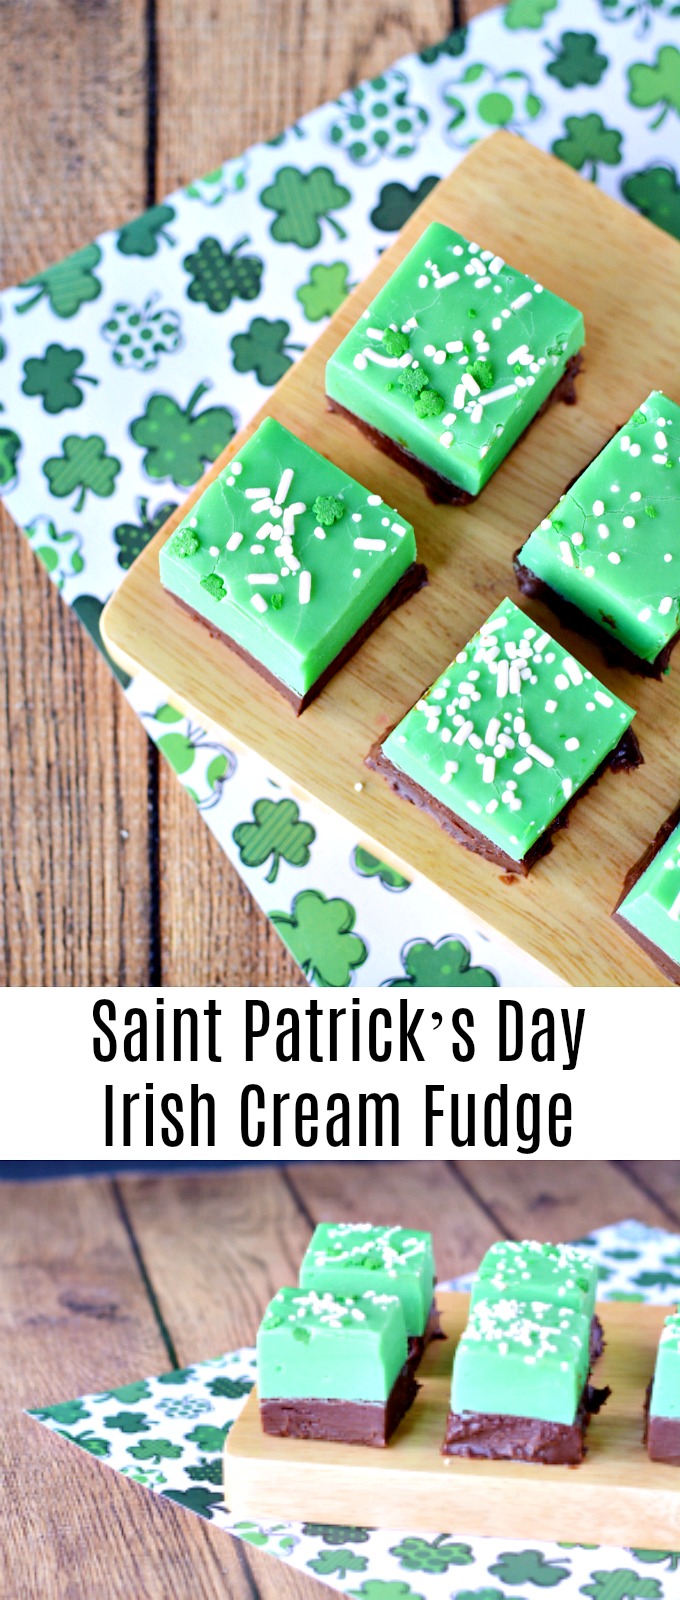 Saint Patrick’s Day Irish Cream Fudge Recipe